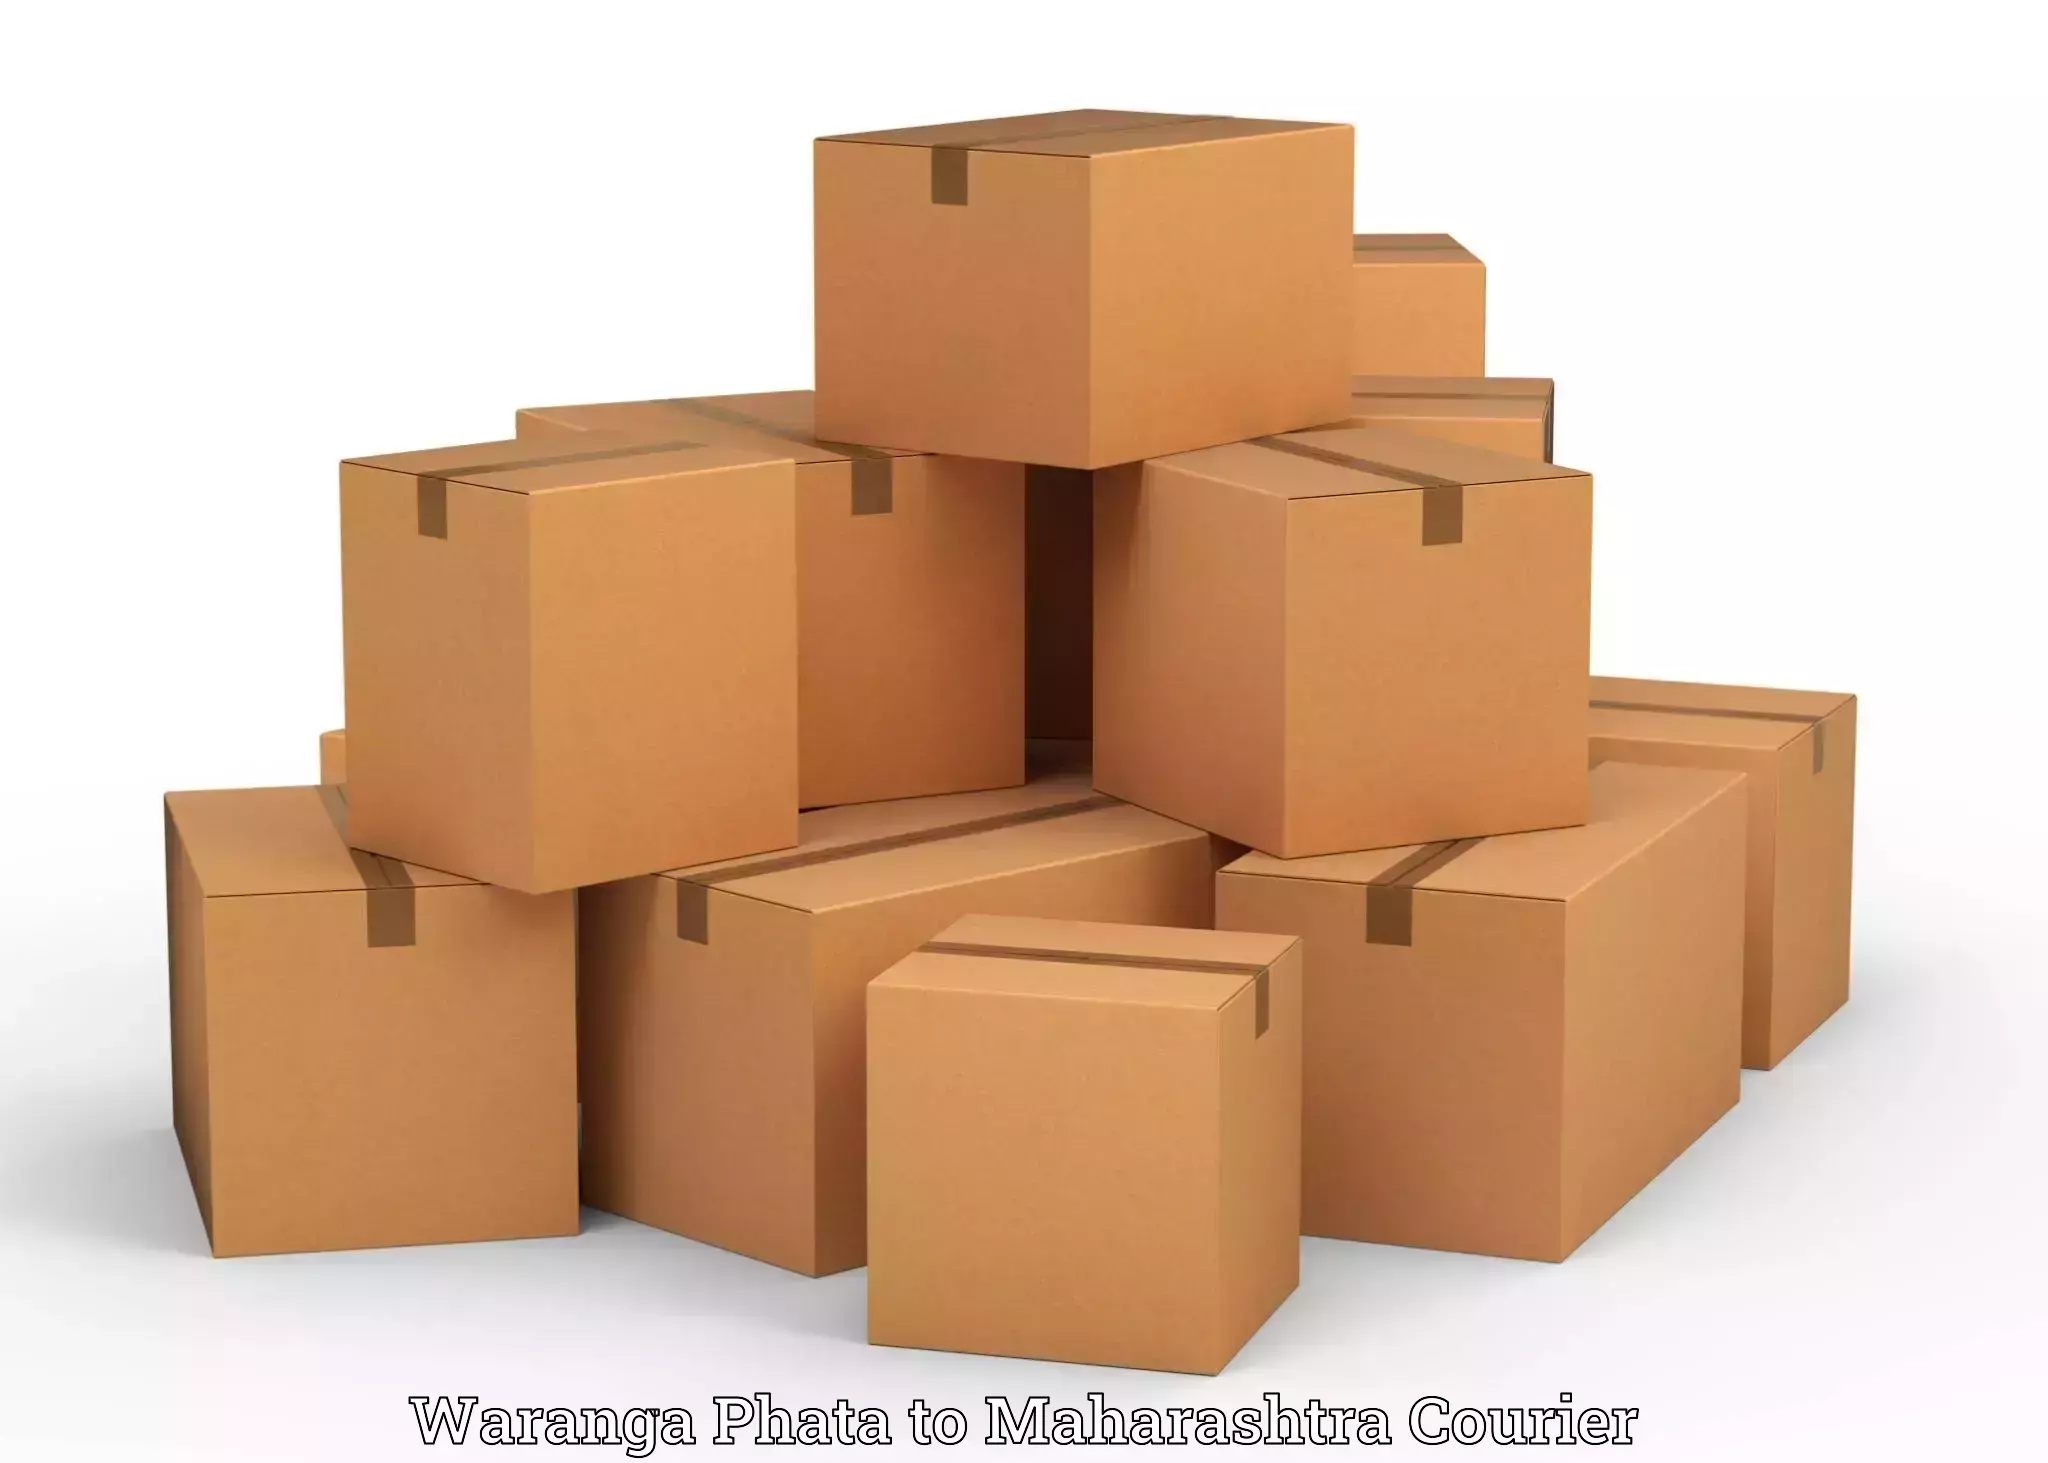 Urgent luggage shipment Waranga Phata to Thane